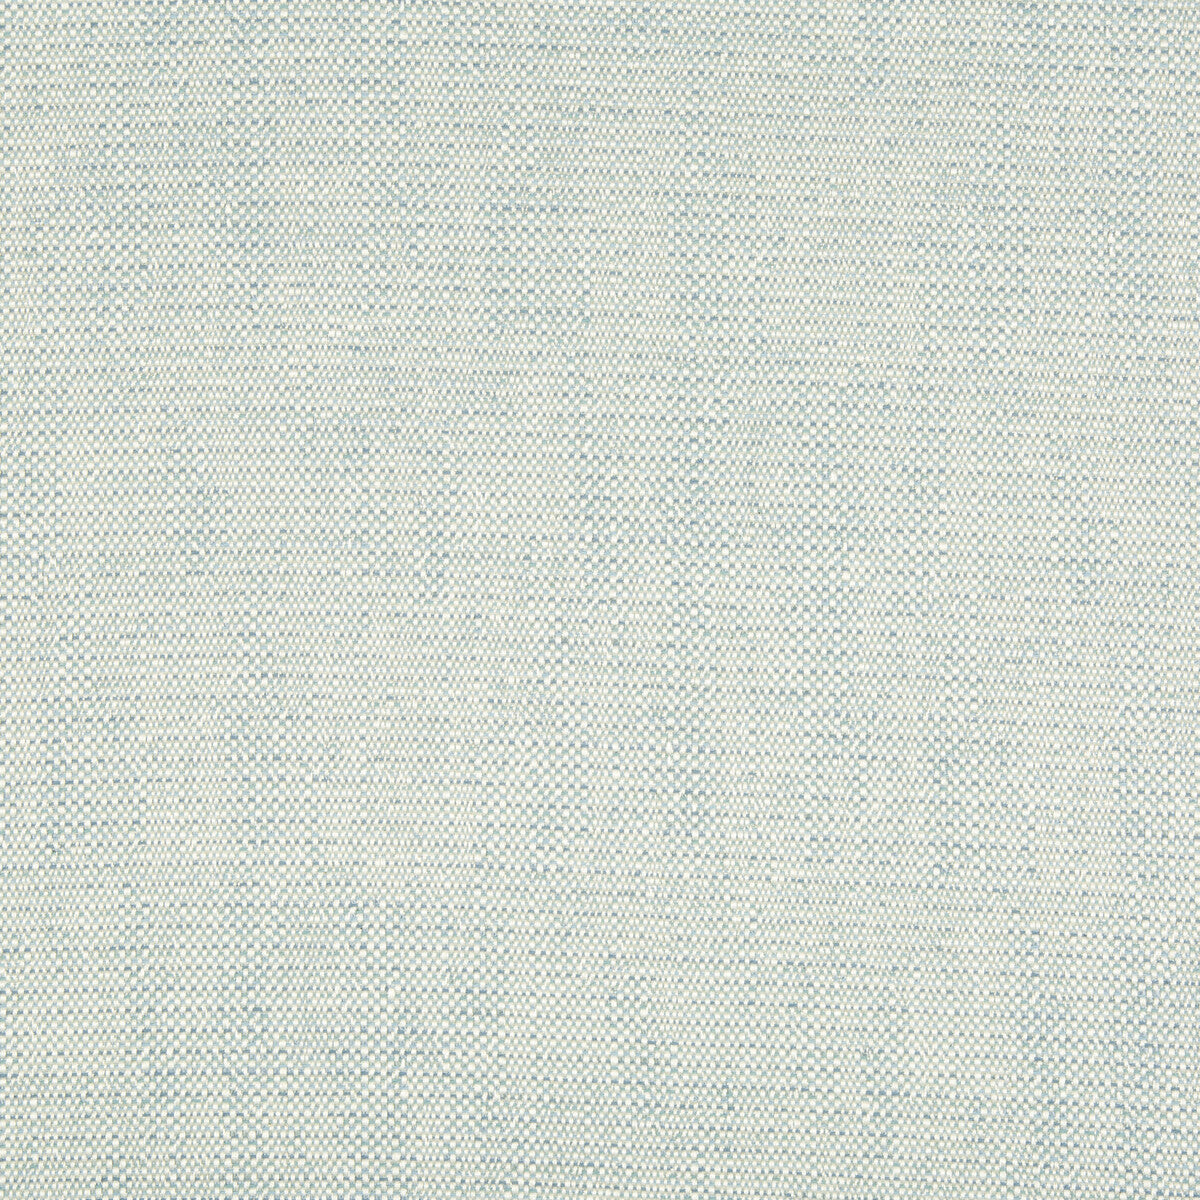 Kravet Design fabric in 34774-15 color - pattern 34774.15.0 - by Kravet Design in the Gis collection